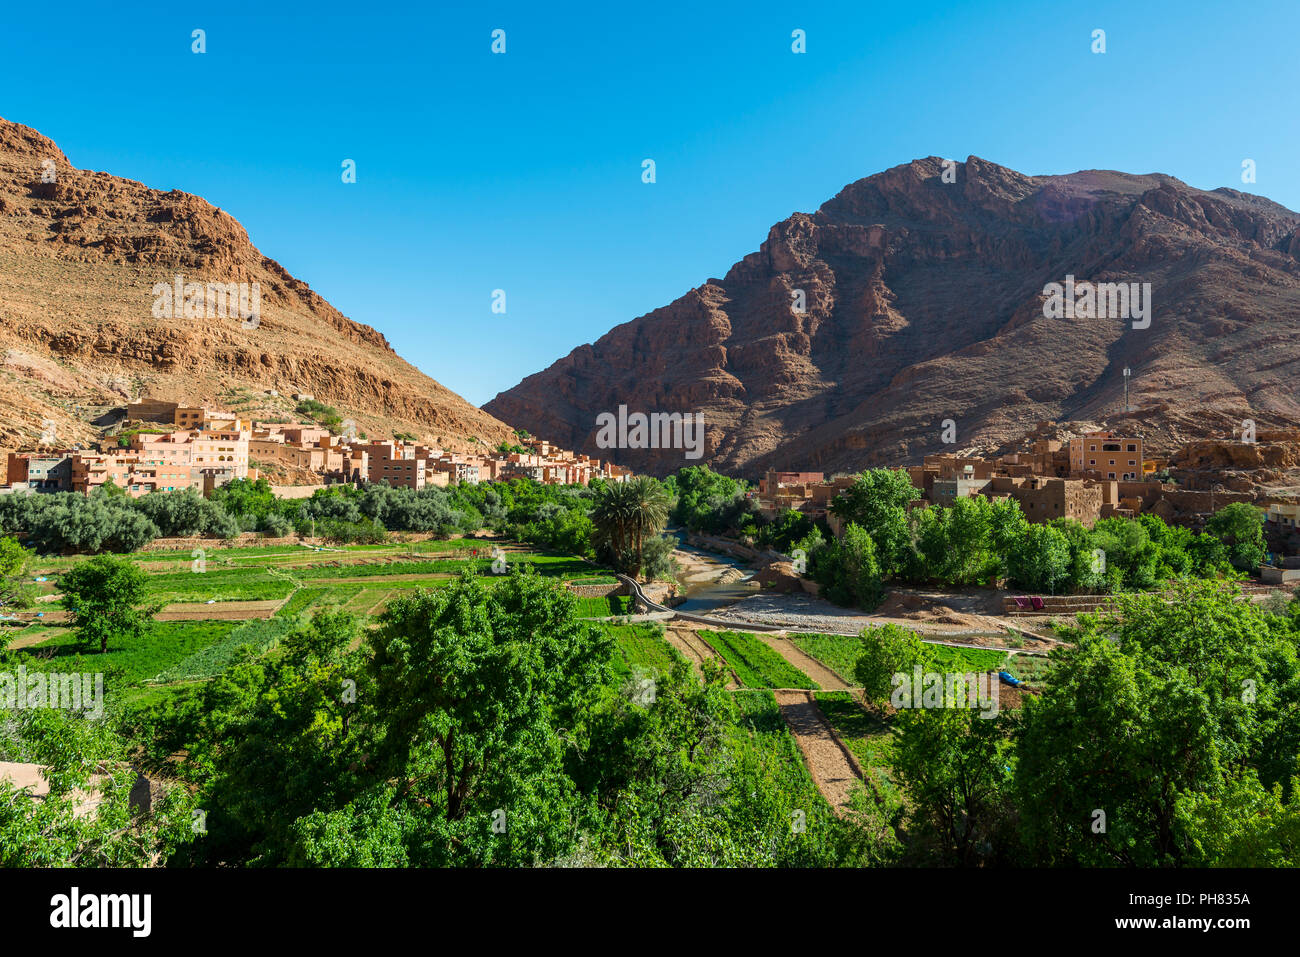 Alten Kasbah, Dorf im Tal, Dadès Marokko Stockfoto